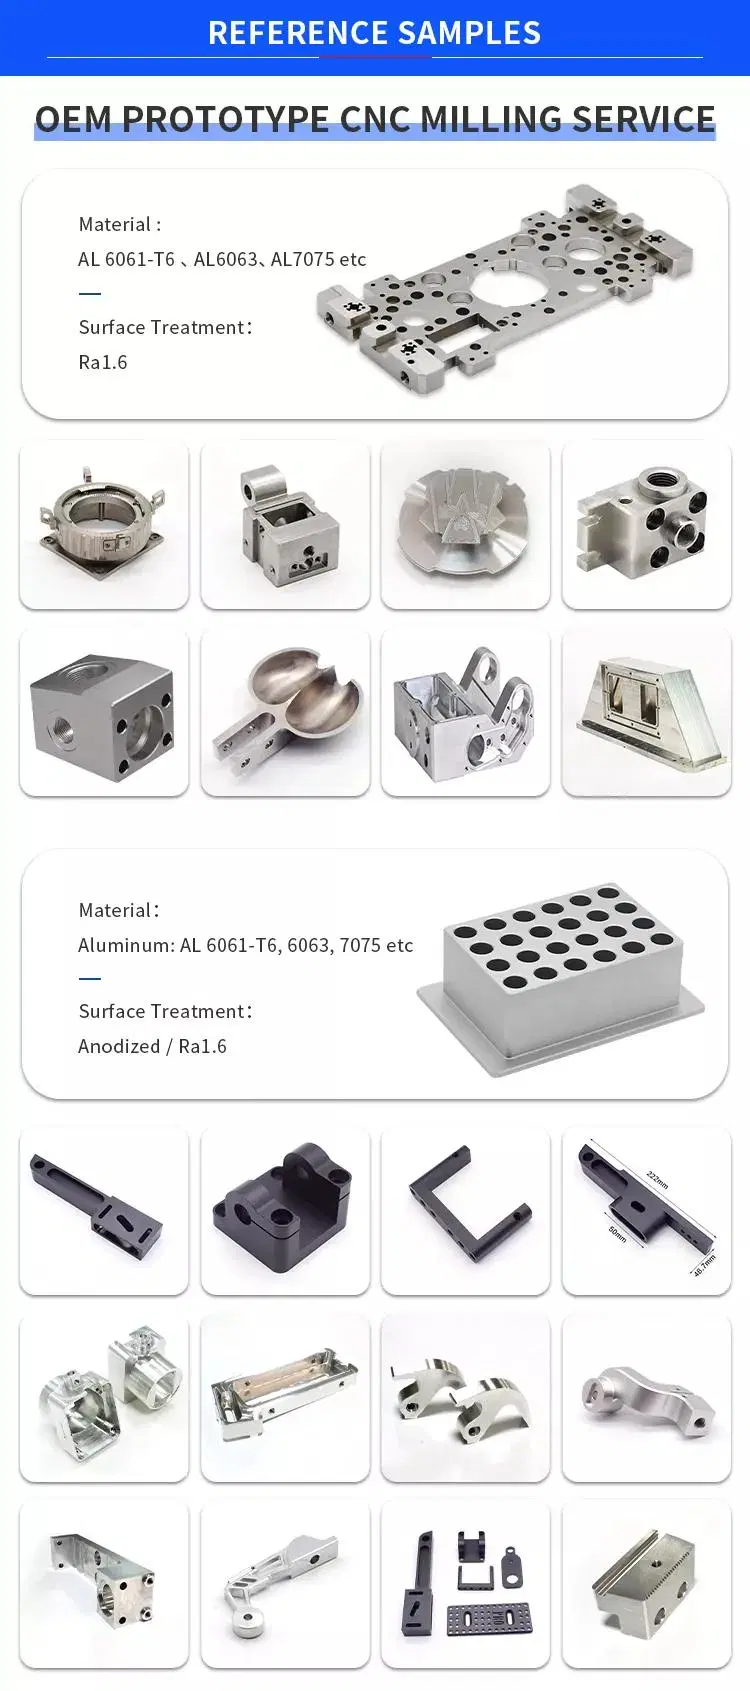 Metal Processing Machinery Custom Machining Milling Aluminum Parts CNC Prototyping Factory OEM